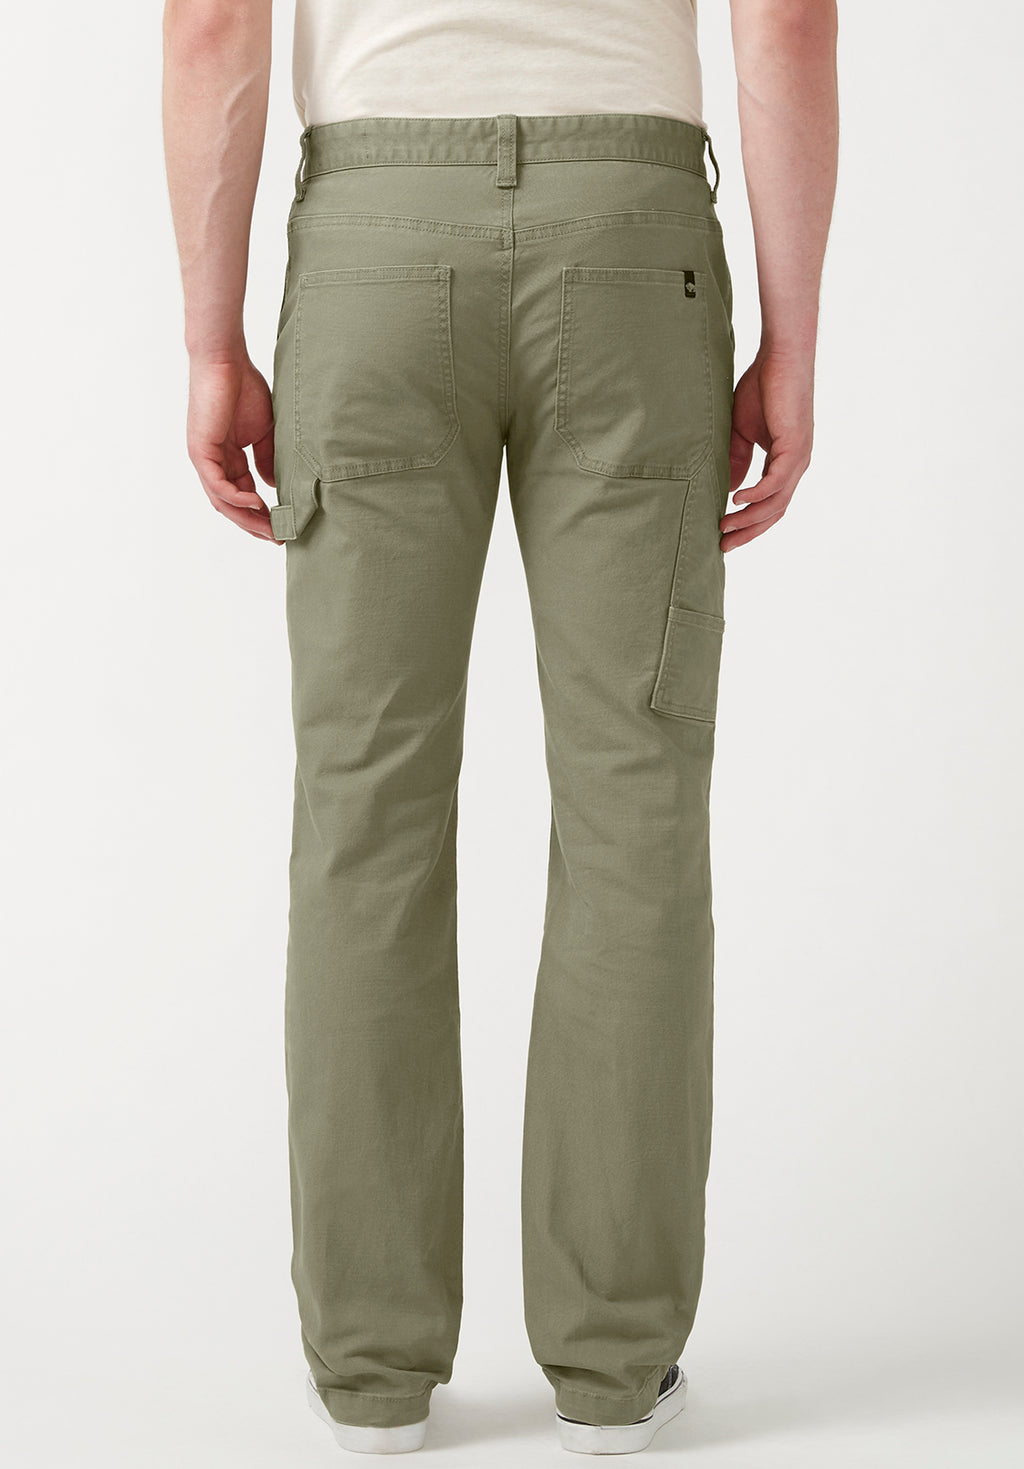 Olive Green Long Cotton Fisherman Pants for Men